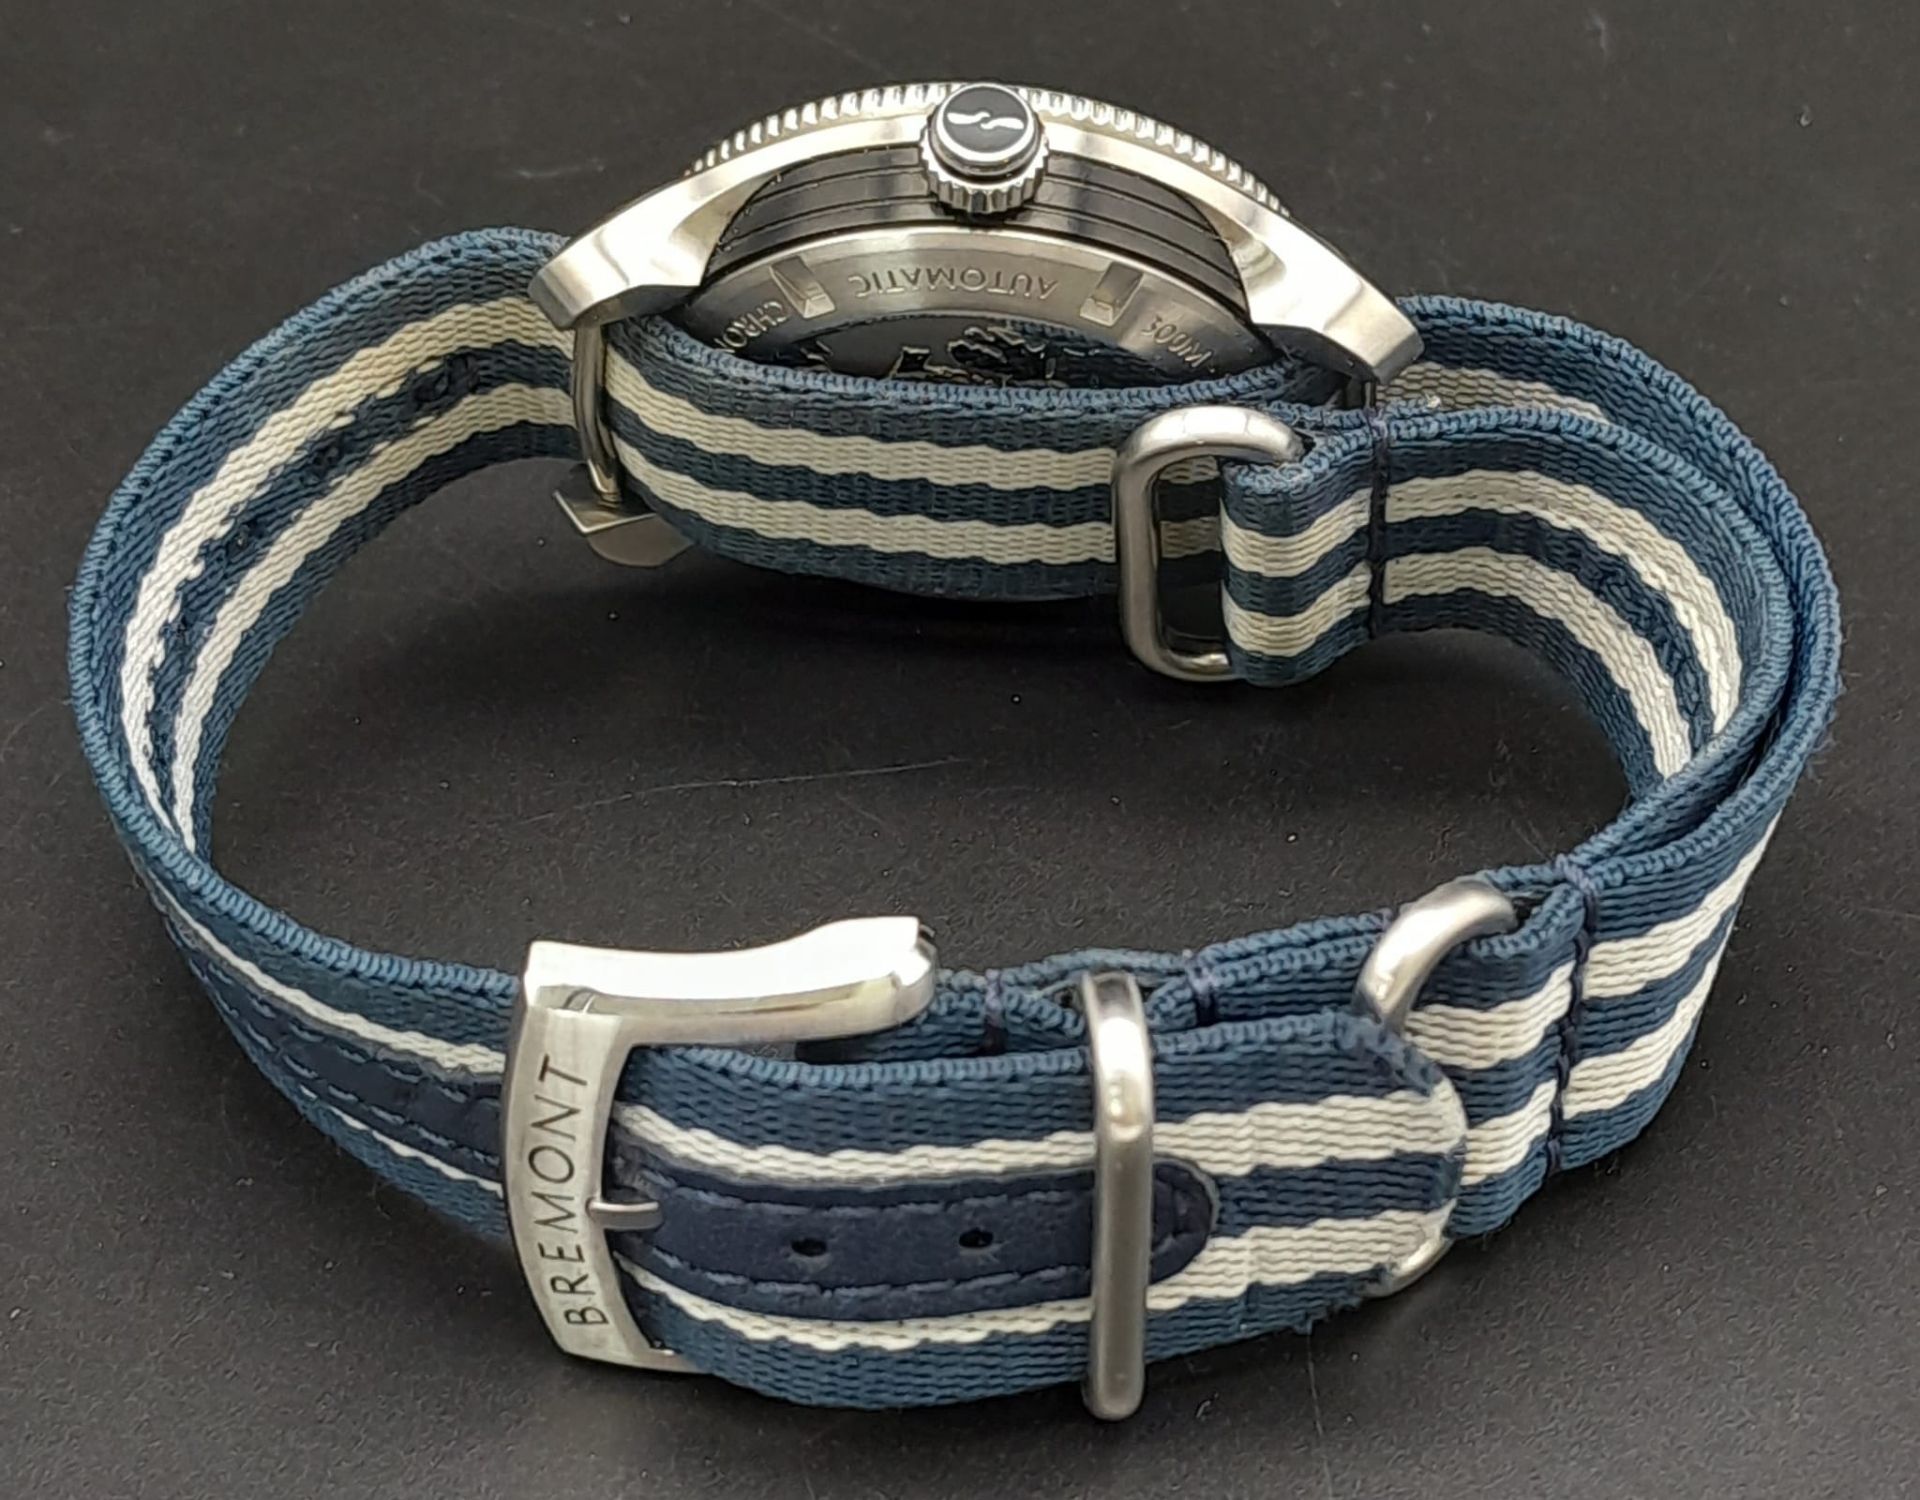 A Bremont Supermarine Karakoram Gents Watch. Striped textile Bremont strap. Stainless steel case - - Image 7 of 17